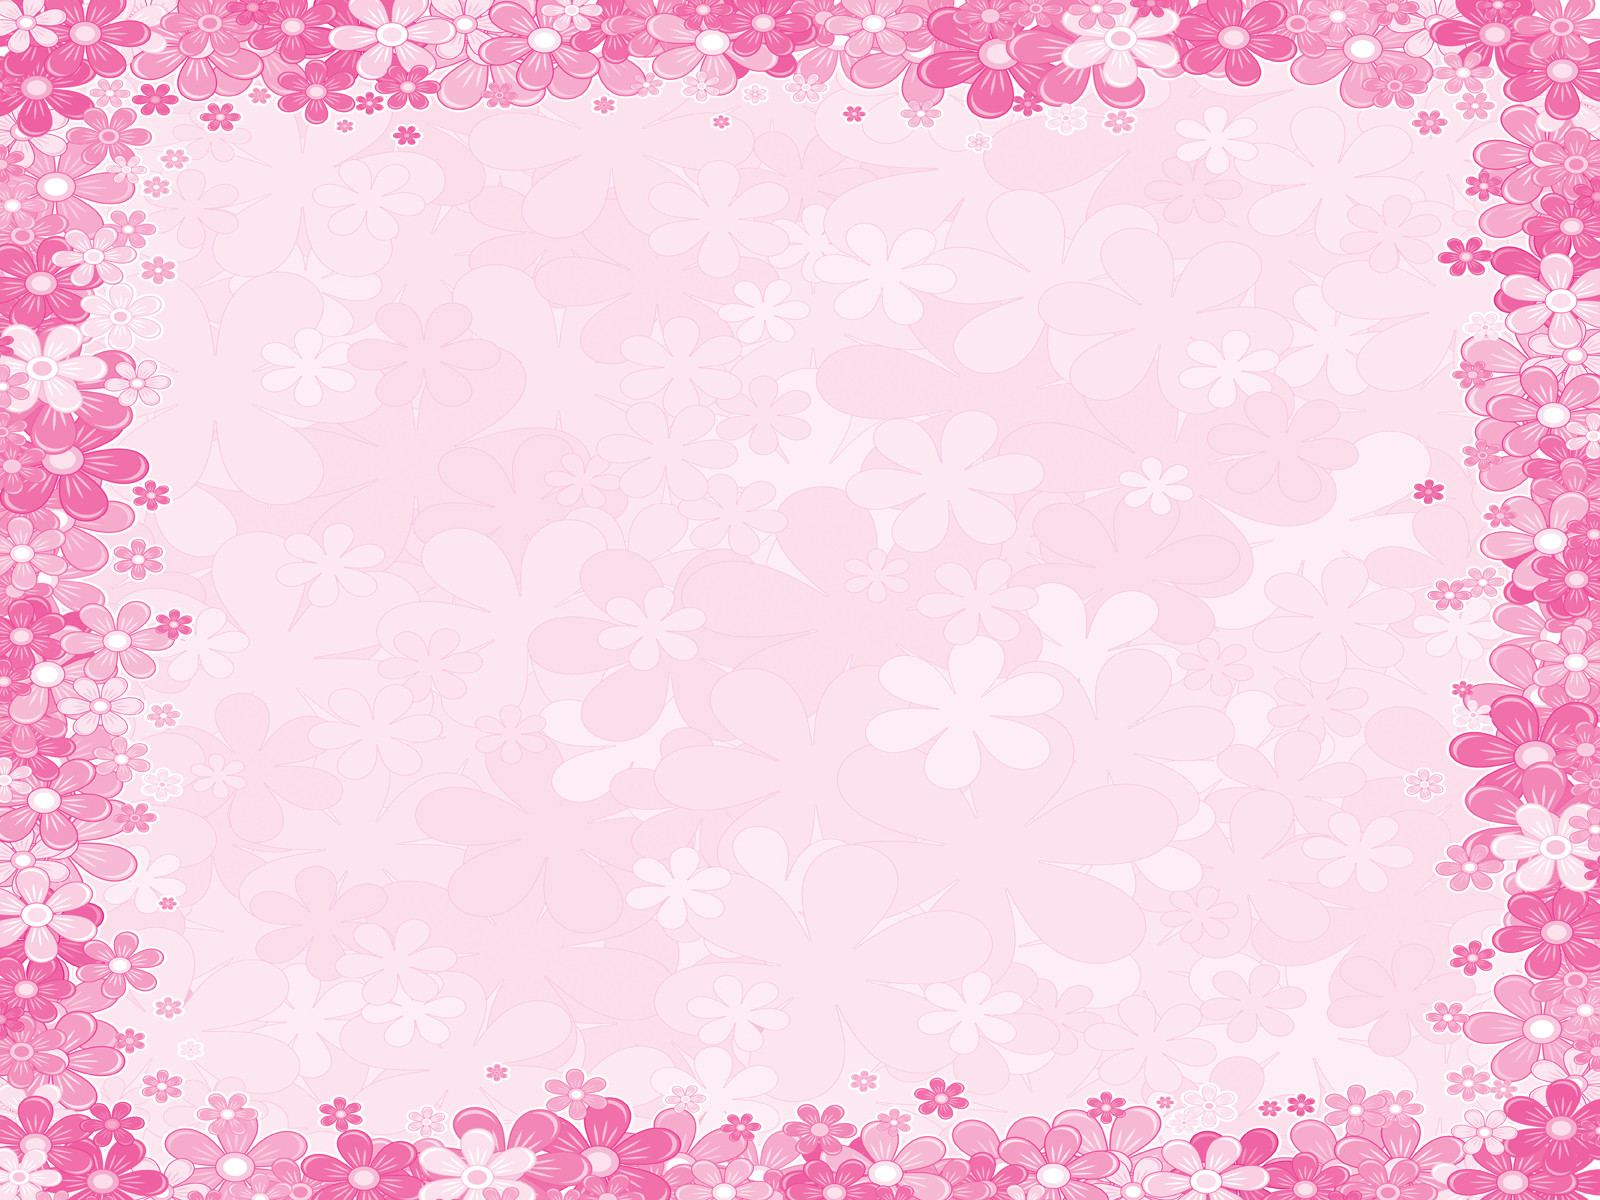 Feminine with pink flowers